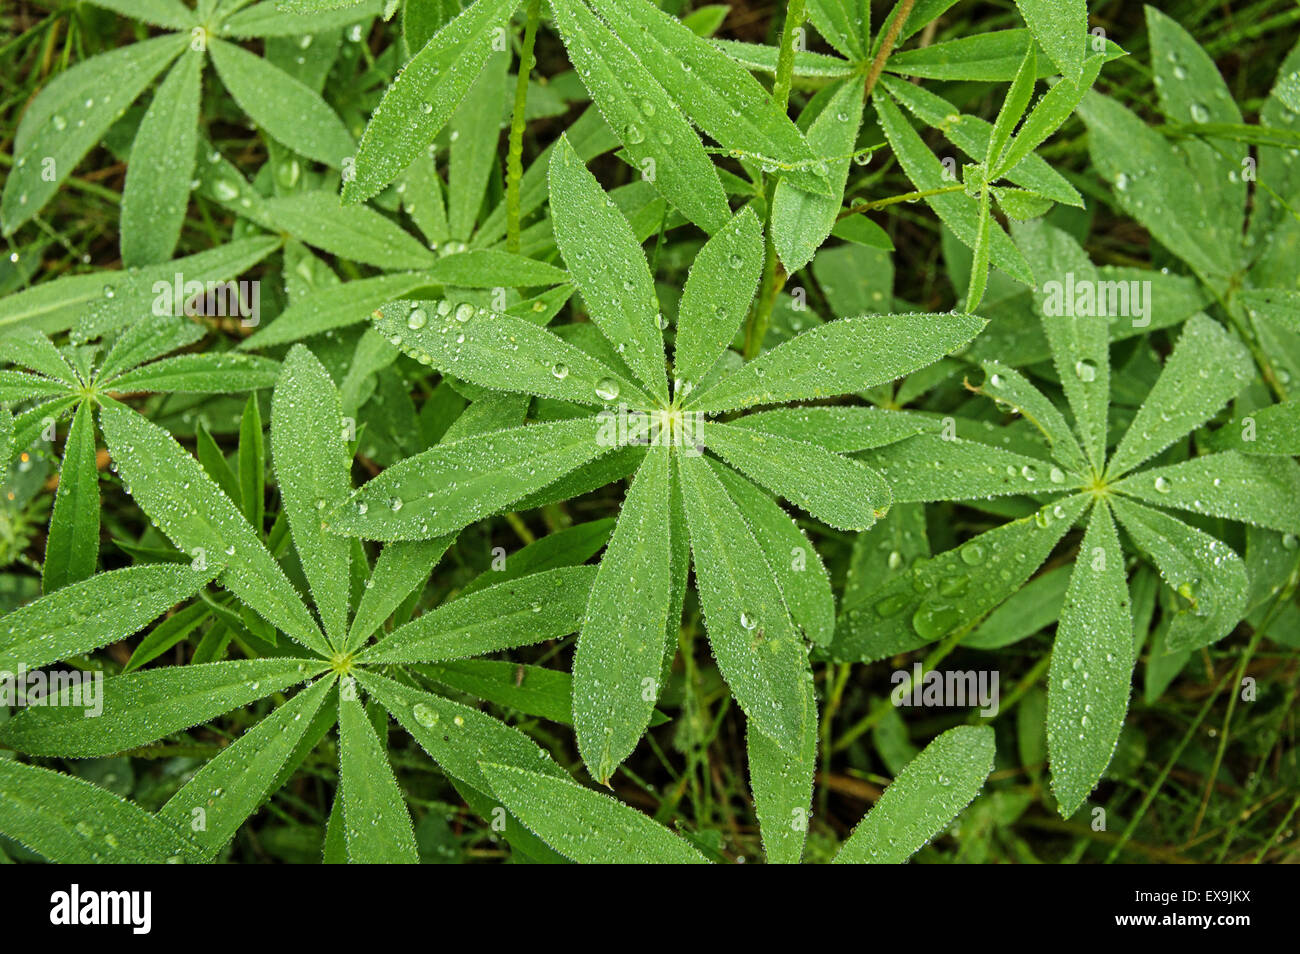 Lupine verdes hojas cubiertas de gotas de rocío Foto de stock